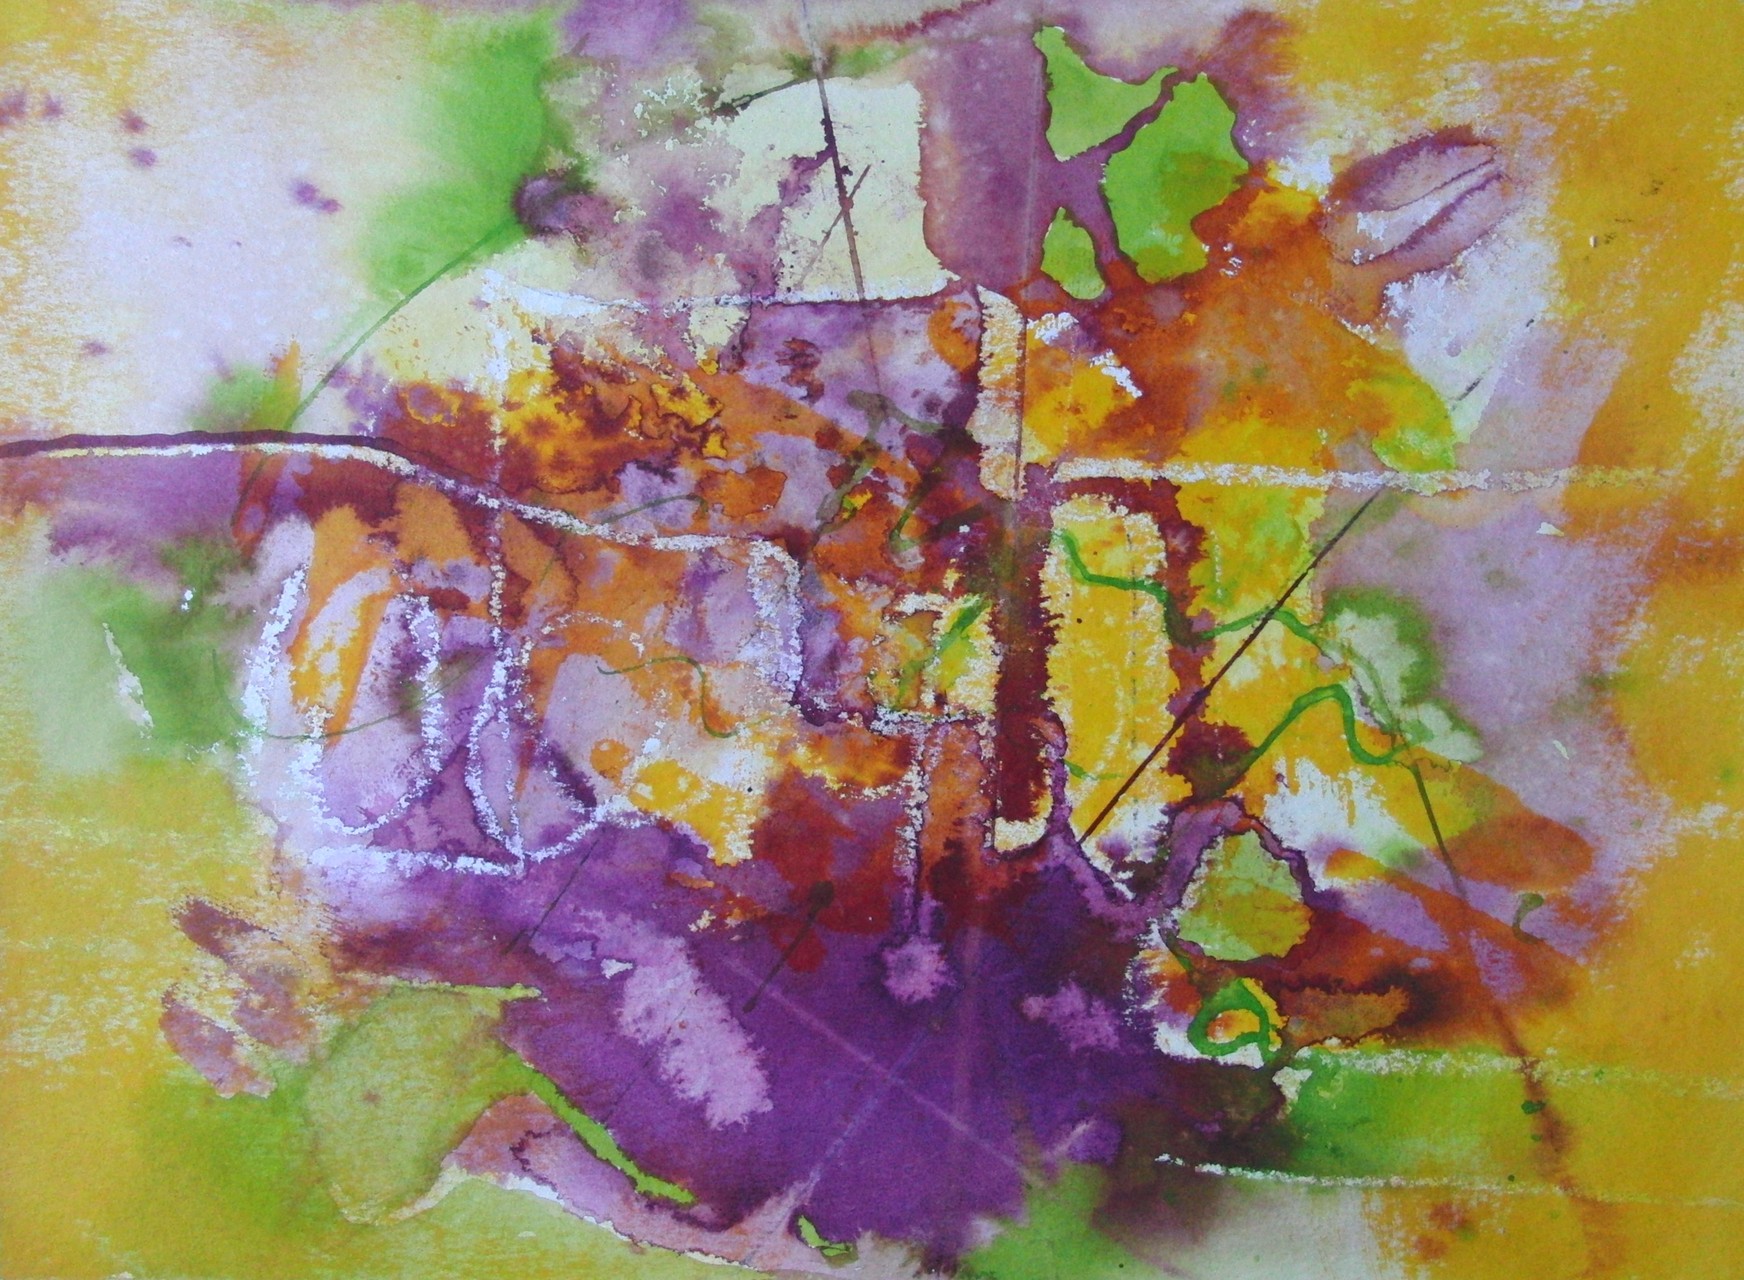 ART HFrei - "Farbenspiel in violett" - Aquarell - 2012